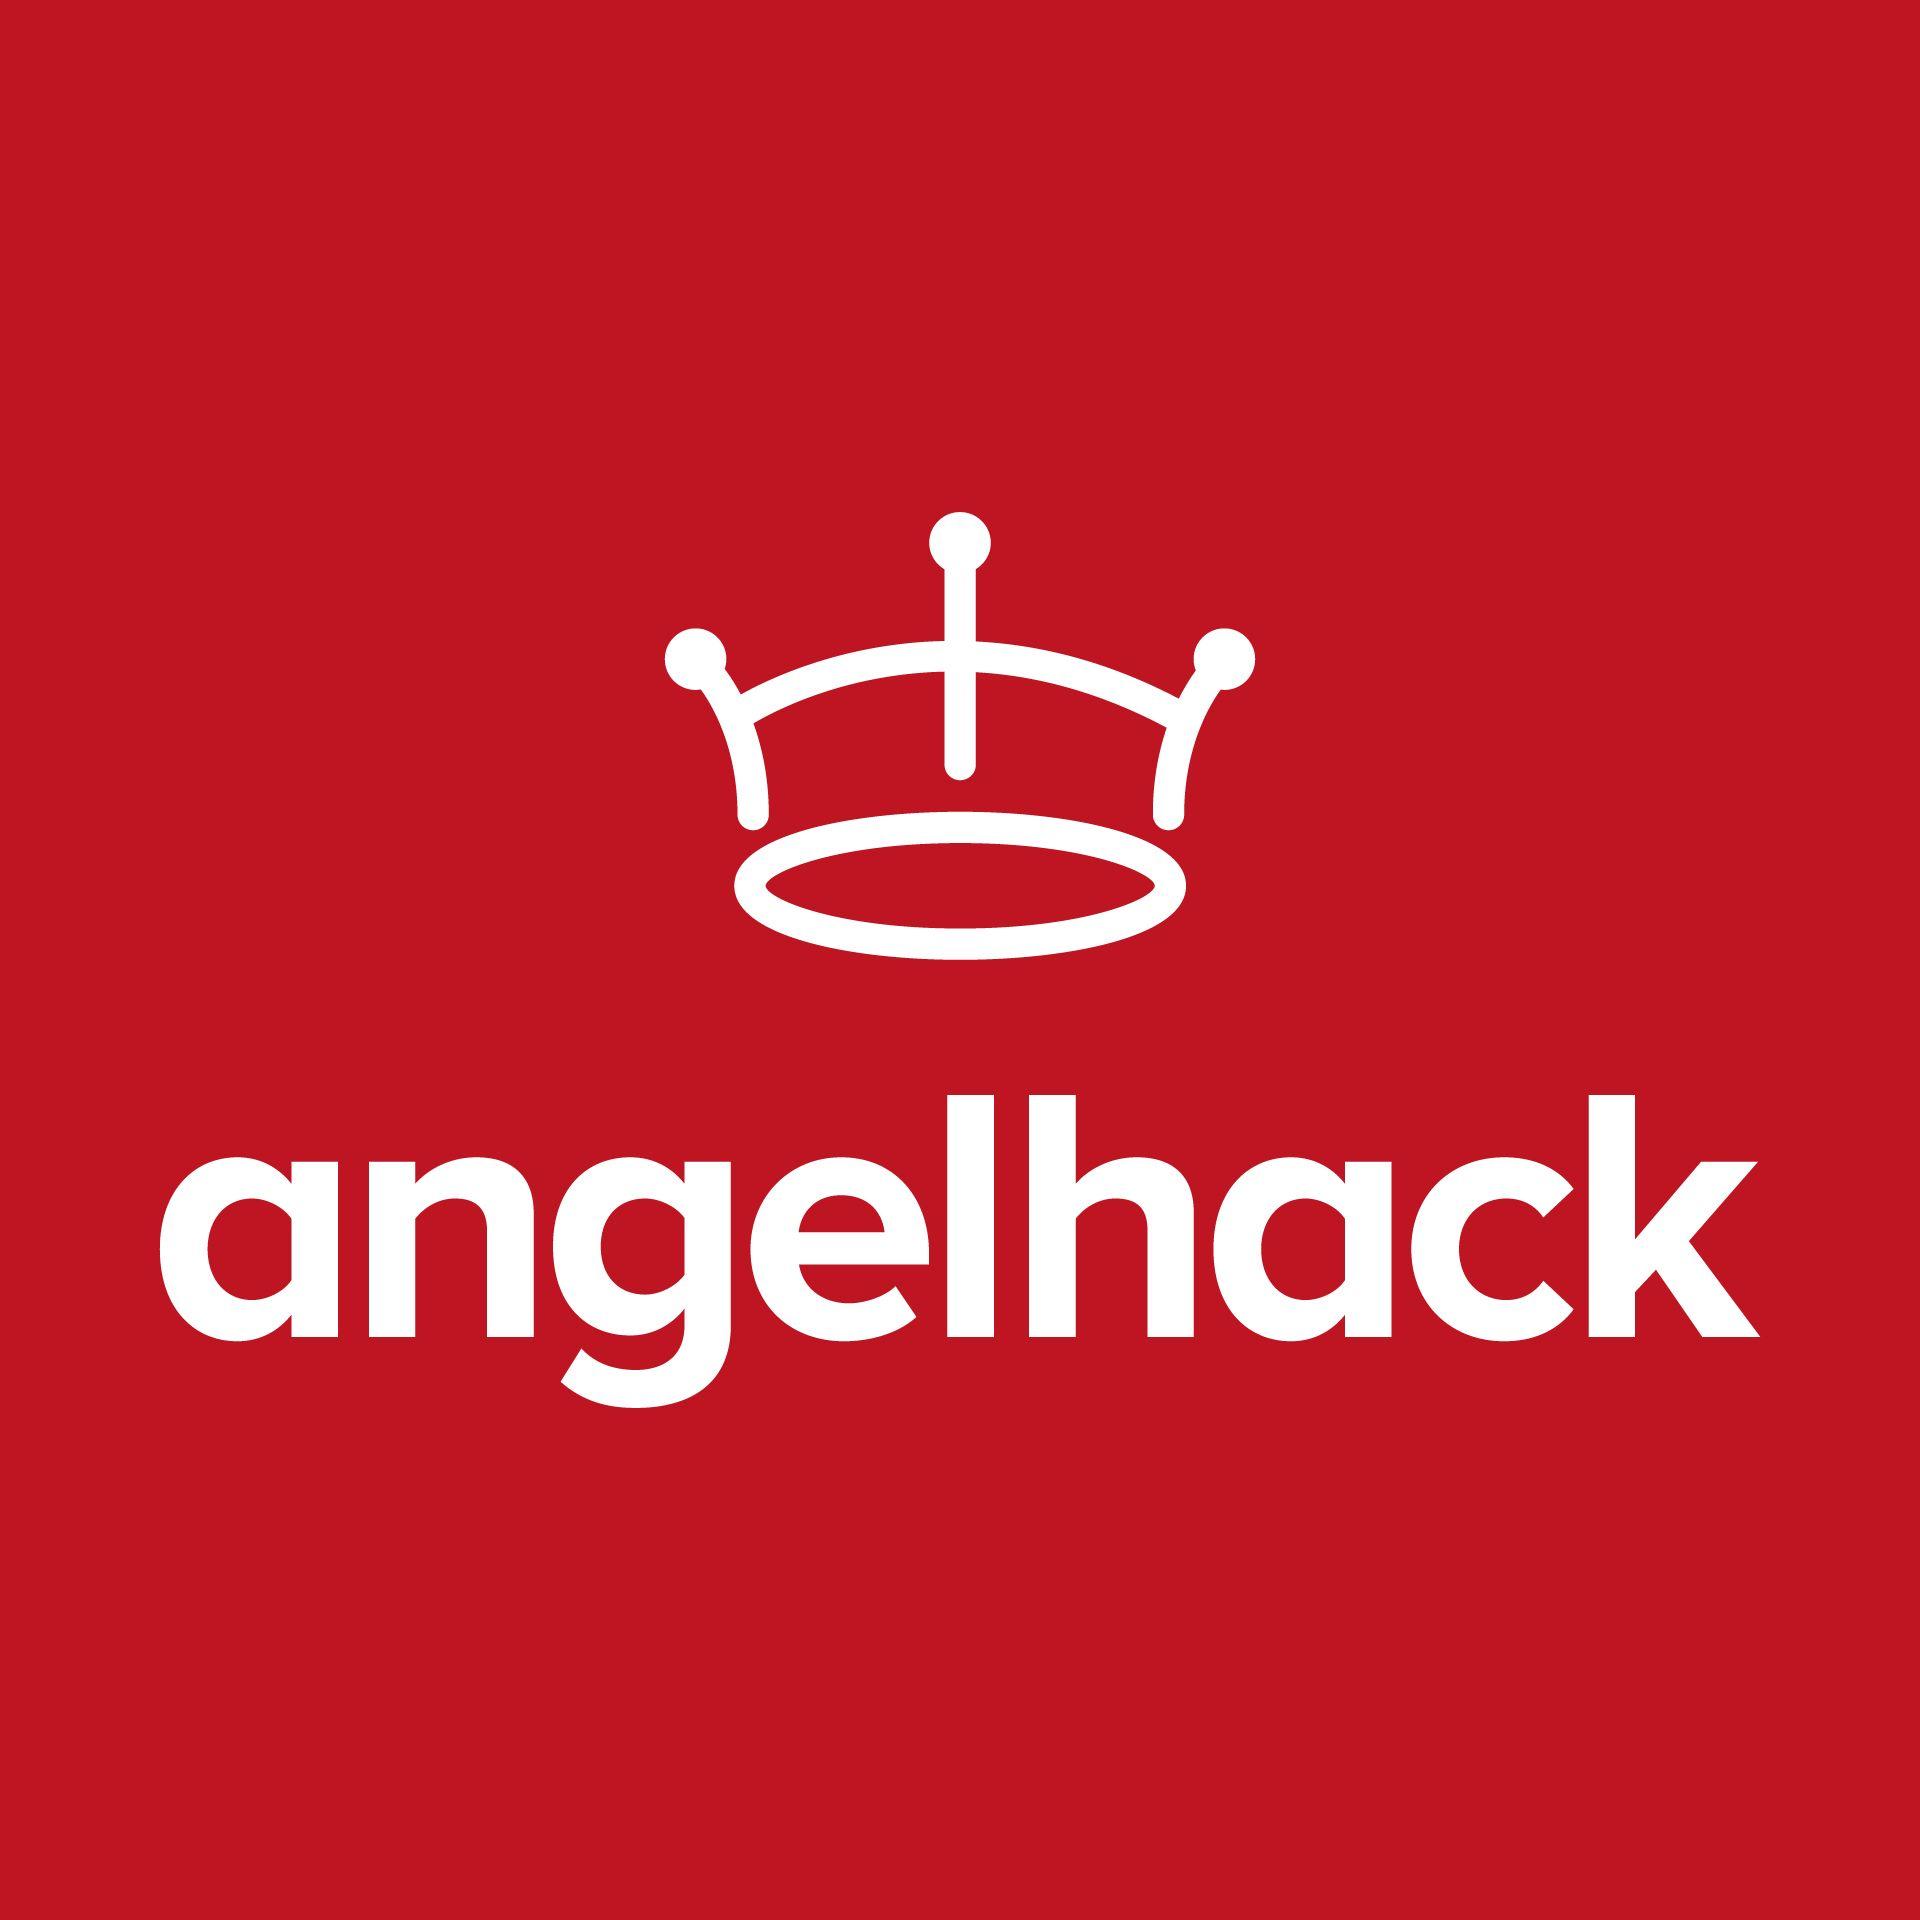 Red and Black Square Logo - Red top square logo. | AngelHack Logos | Pinterest | Logos, Logo ...